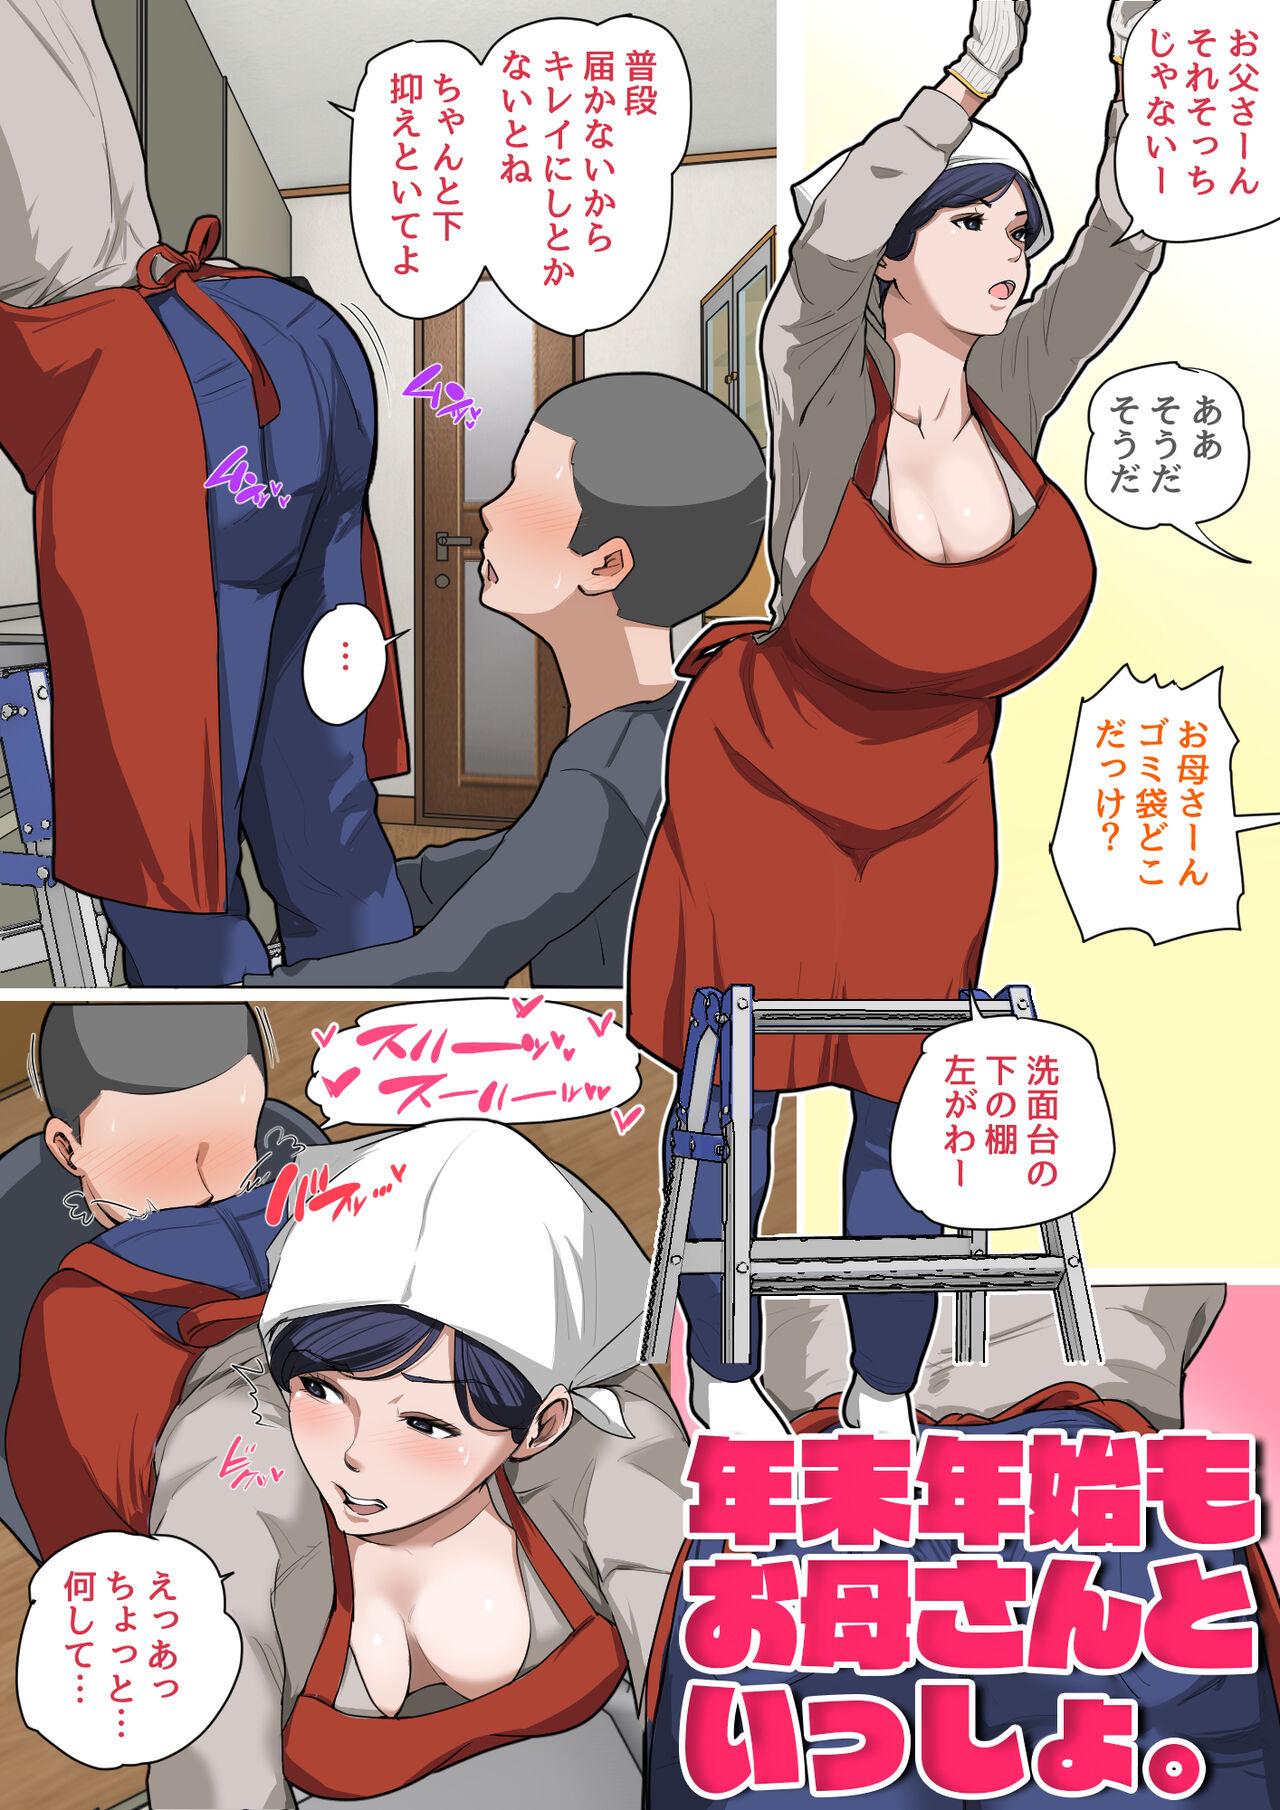 Gay Bukkakeboys Musuko o Tataseru haha no ana.〜 Boshi kan tanhenshū 〜 - Original Gang - Page 2